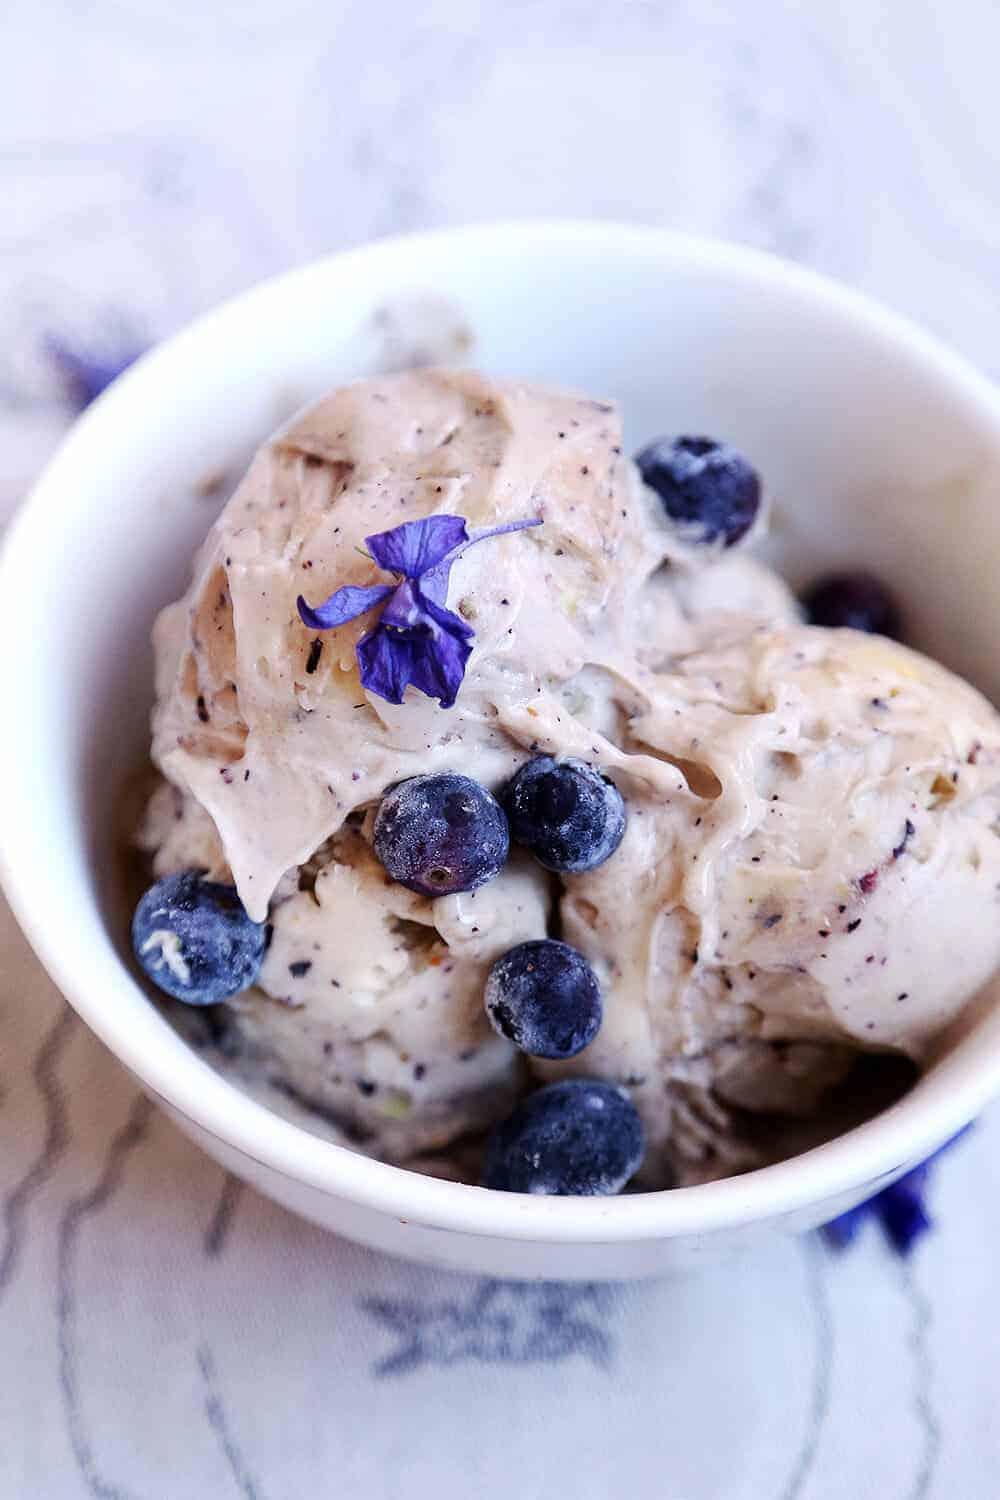 Blueberry Banana Ice Cream